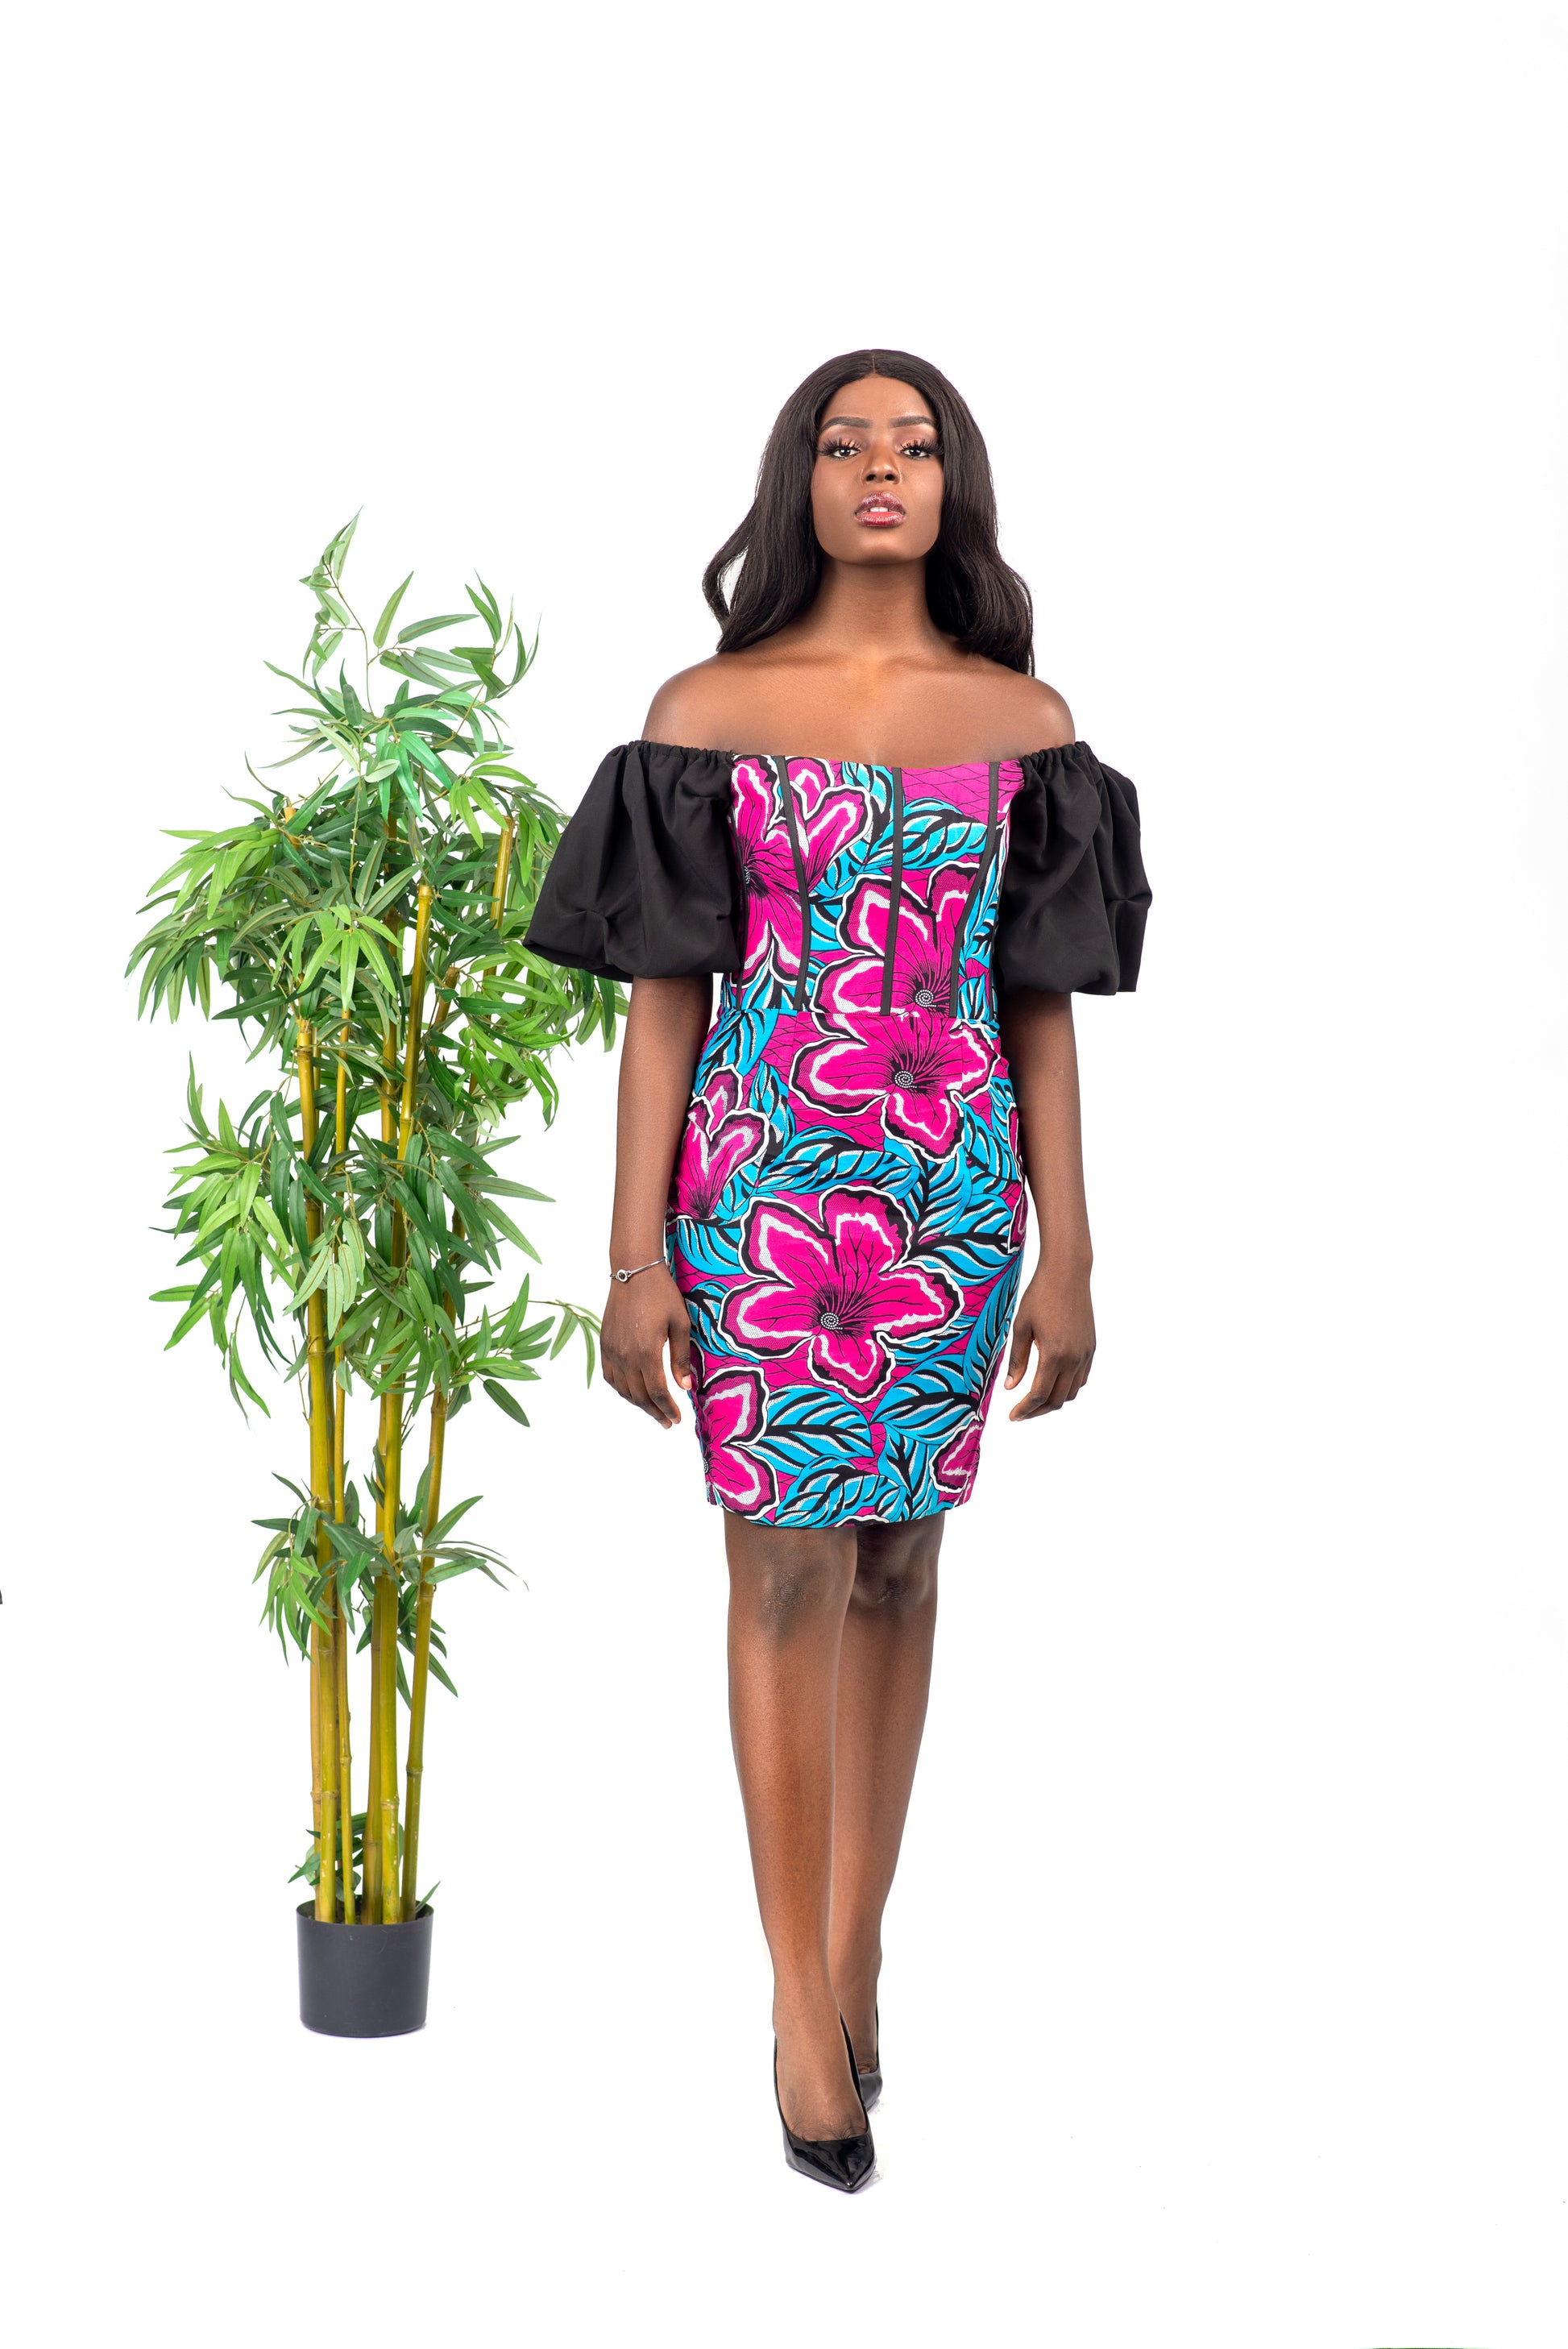 Beautiful Corset dress  Ghana fashion, Corset dress, Fashion